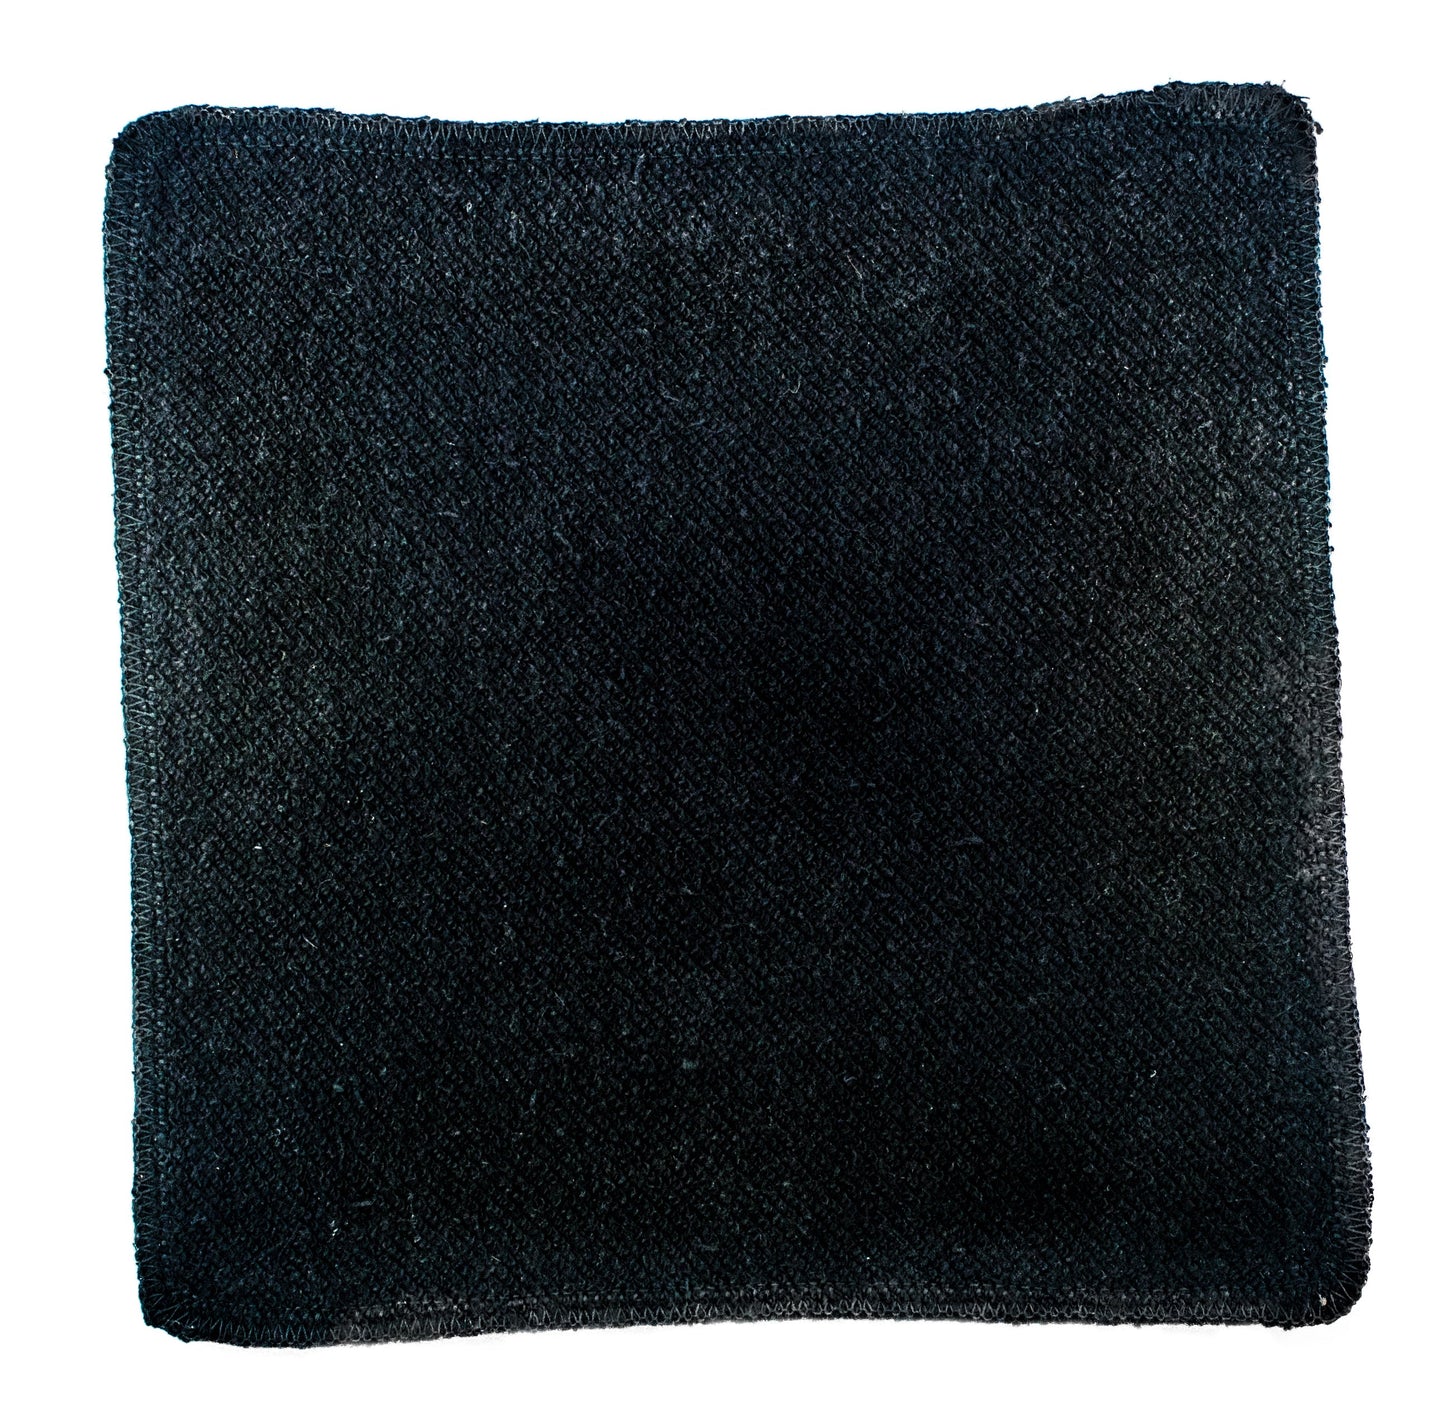 Hemp & Organic Cotton Washcloths (Black)